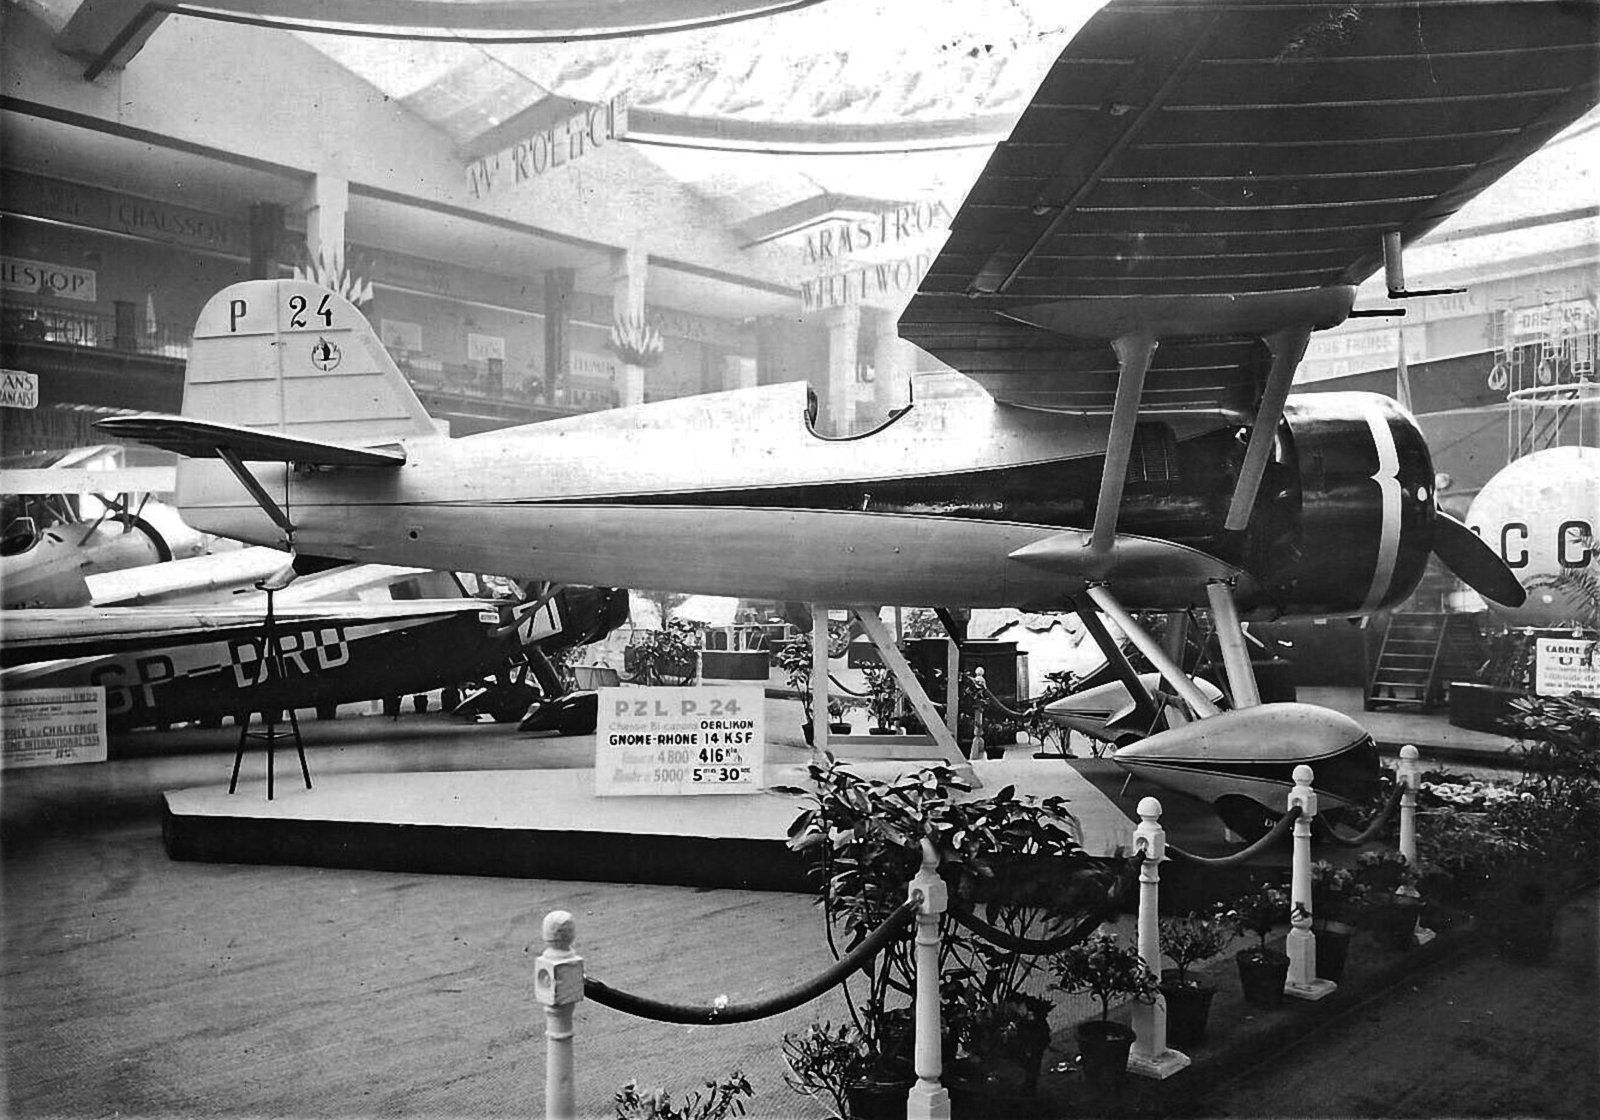 PZL P-24/II prototype, the International Paris Air Show, 1934